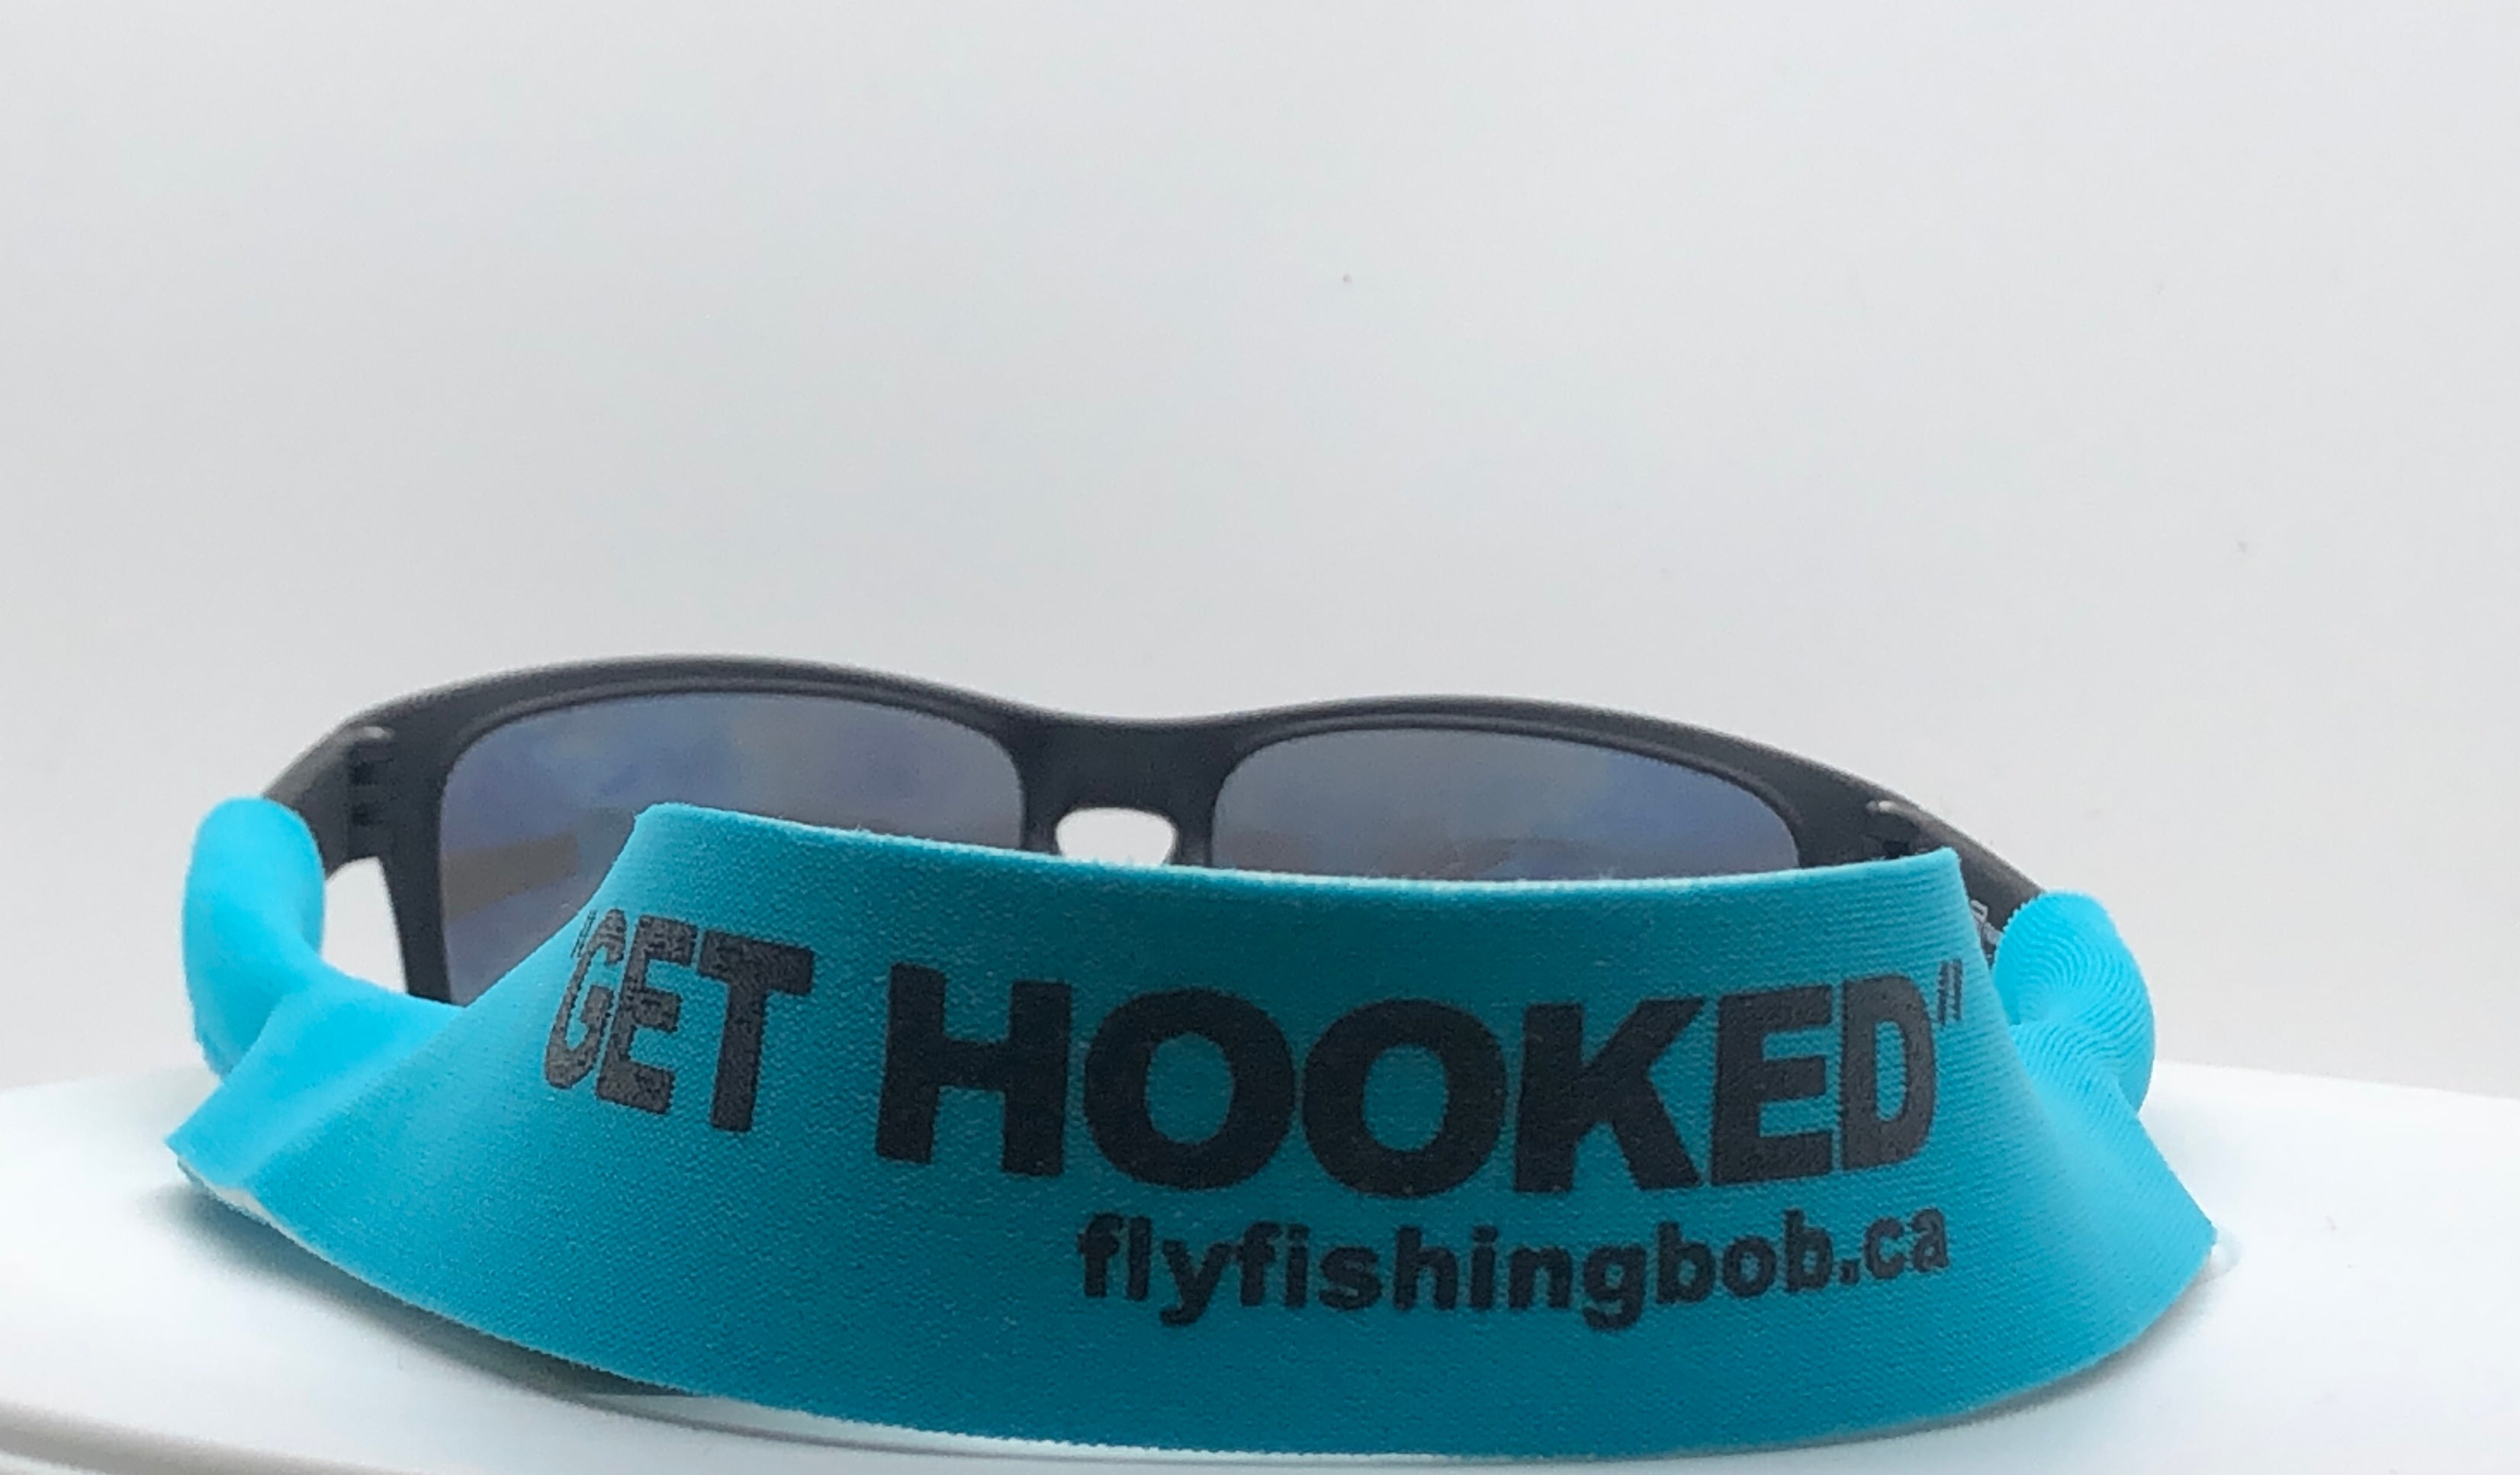 " Get Hooked" Vigor polarized + sunglasses